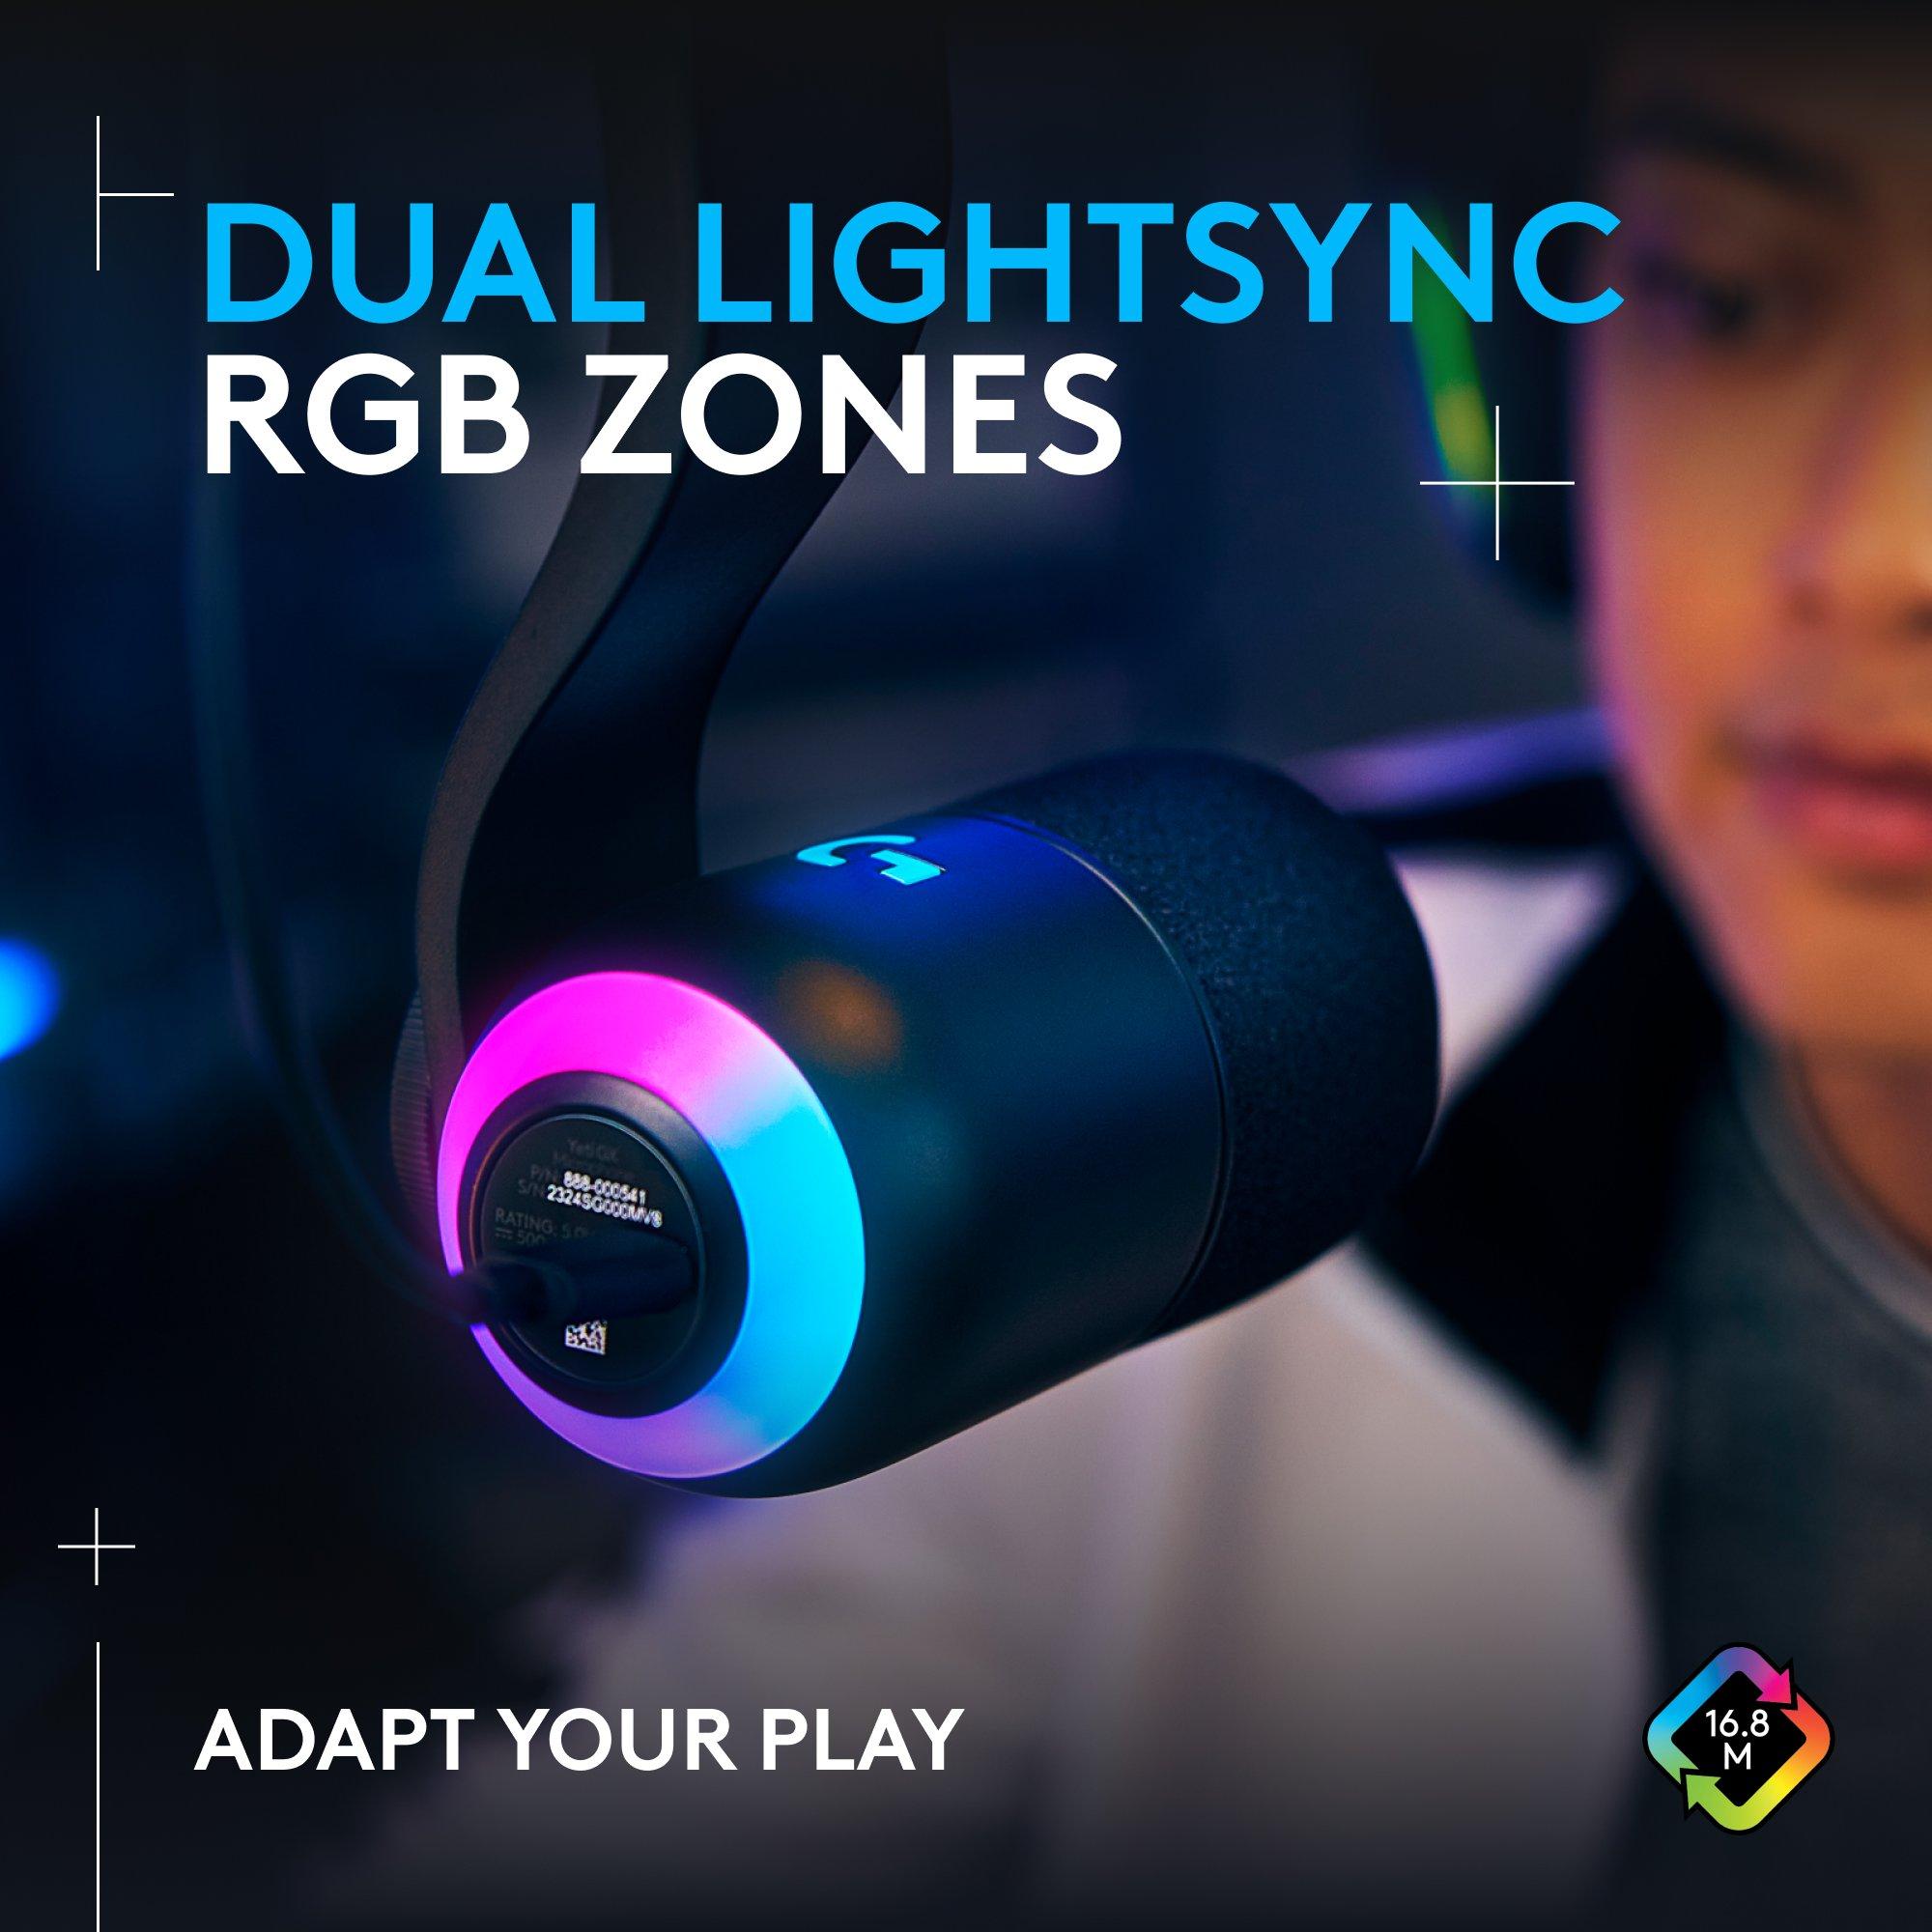 Logitech Yeti GX Dynamic RGB Gaming Microphone with Lightsync Black